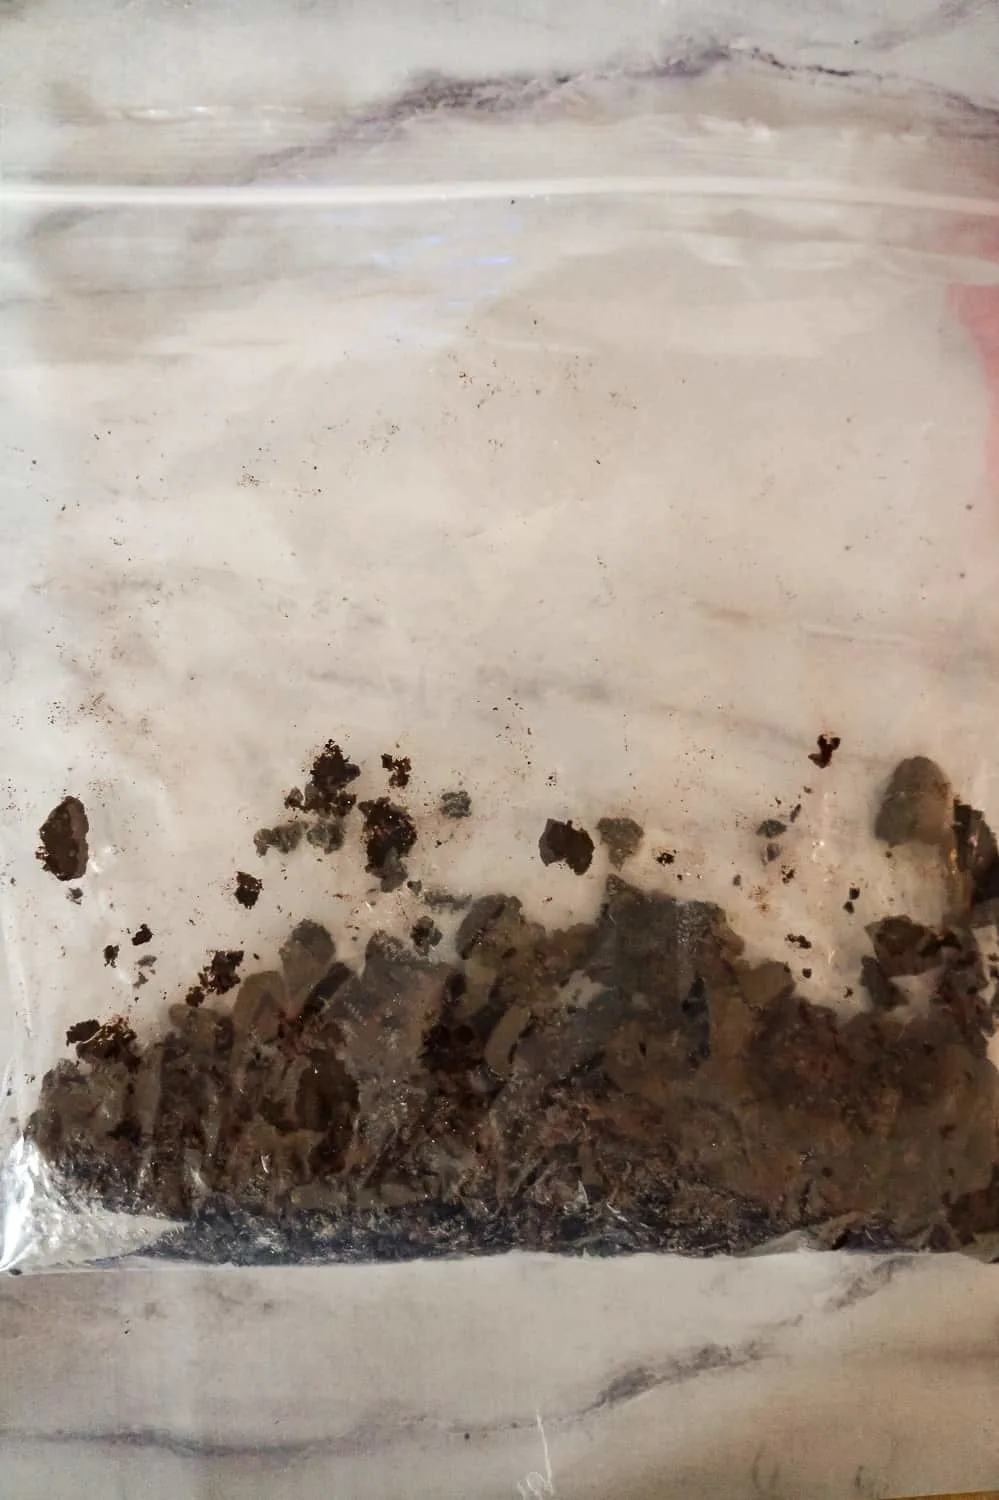 crumbled Oreo cookies in a Ziploc bag